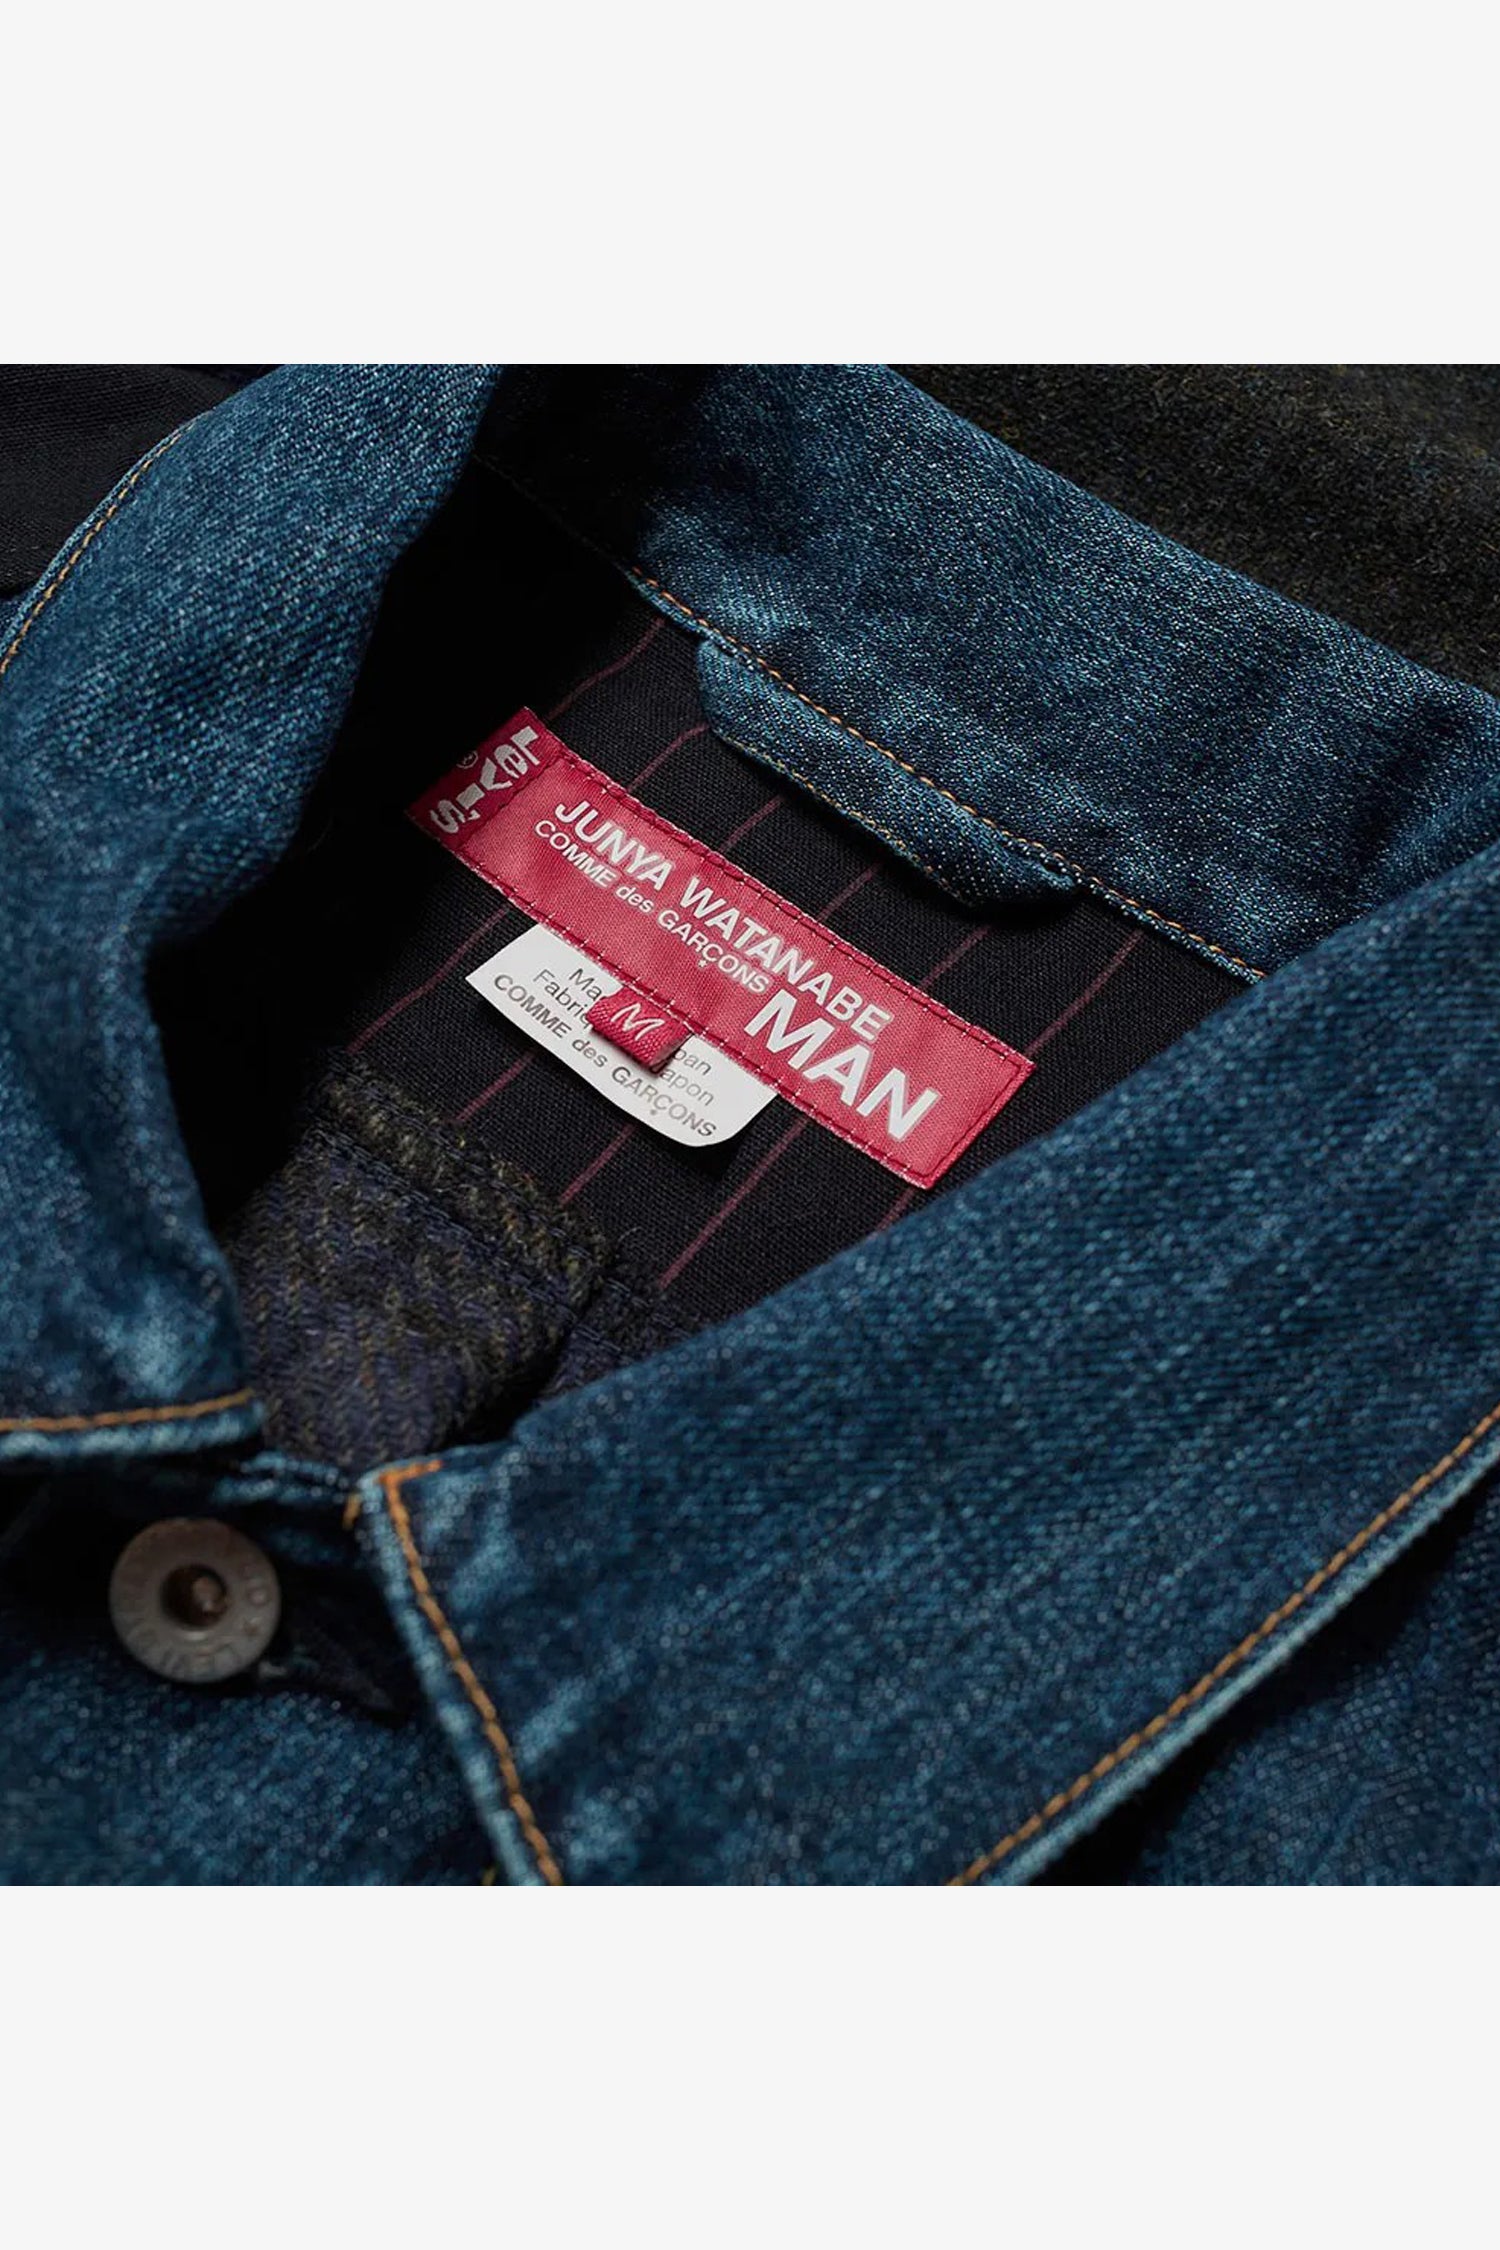 Selectshop FRAME - JUNYA WATANABE MAN Levi's Wool Patchwork Check Trucker Jacket Outerwear Dubai